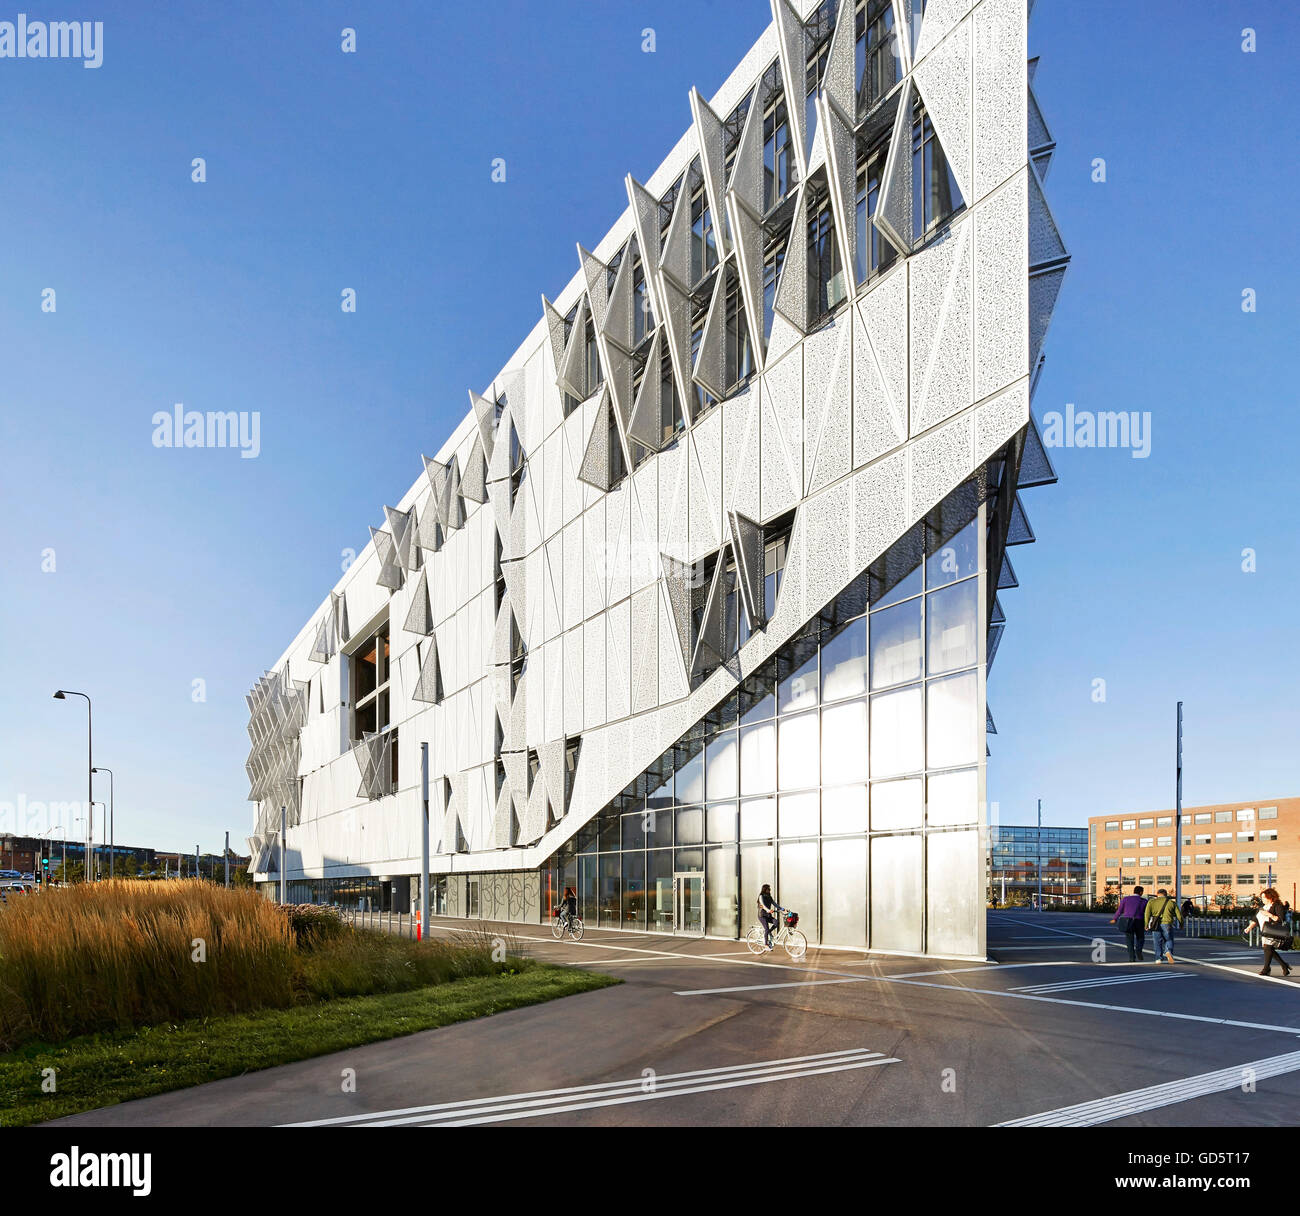 Corner elevation of exterior facade with adjustable triangular perforated steel shutters. SDU Campus Kolding, Kolding, Denmark. Stock Photo